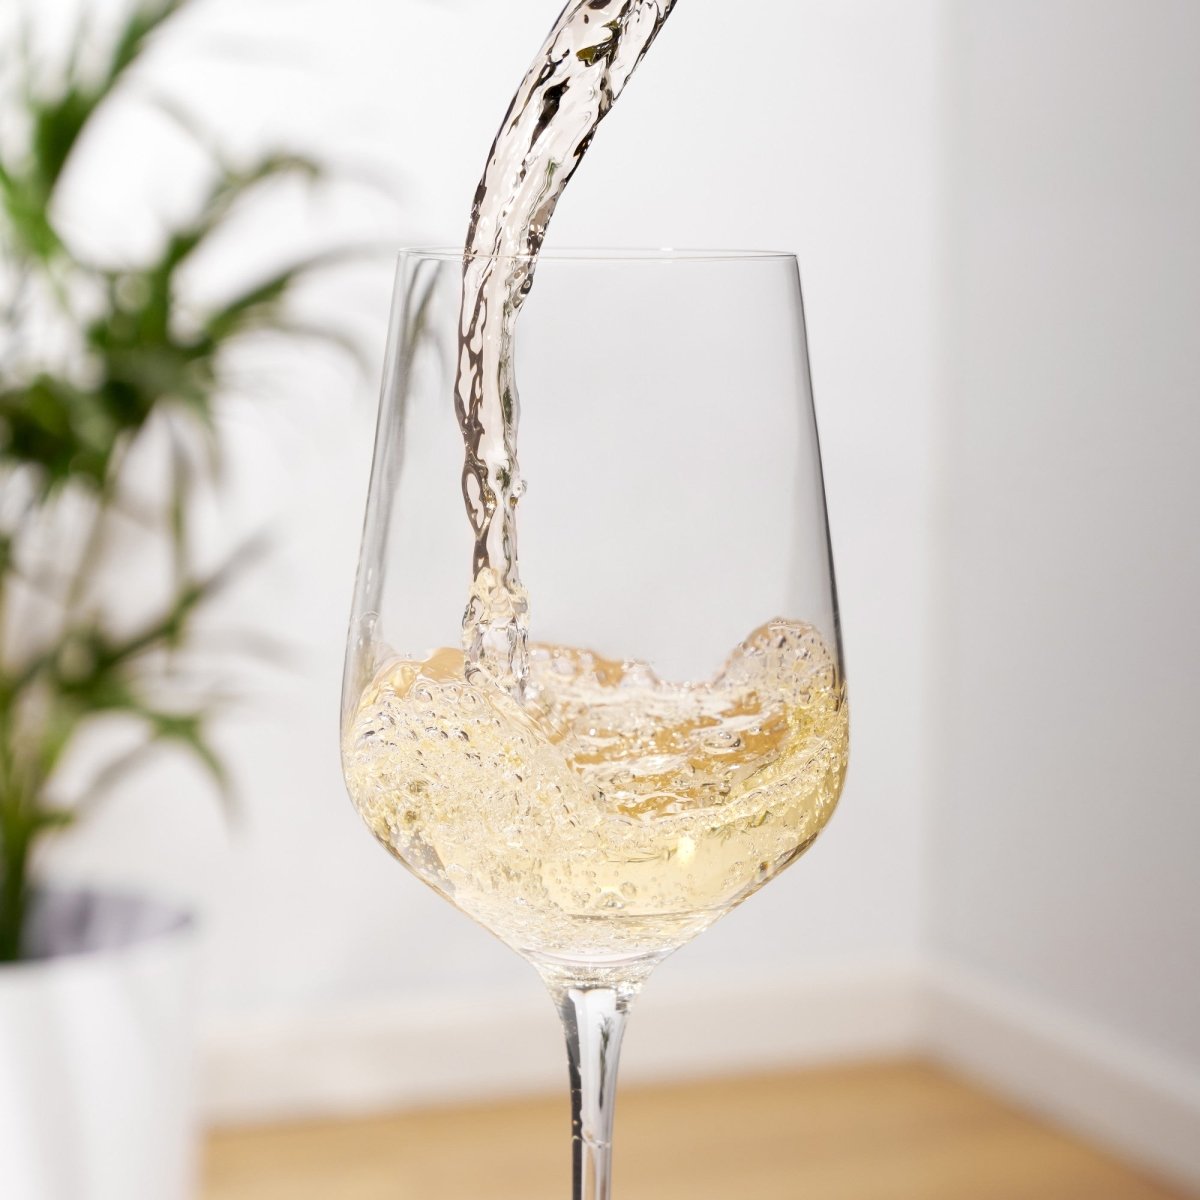 Viski European Crystal Martini Glasses, Set of 4 – lily & onyx